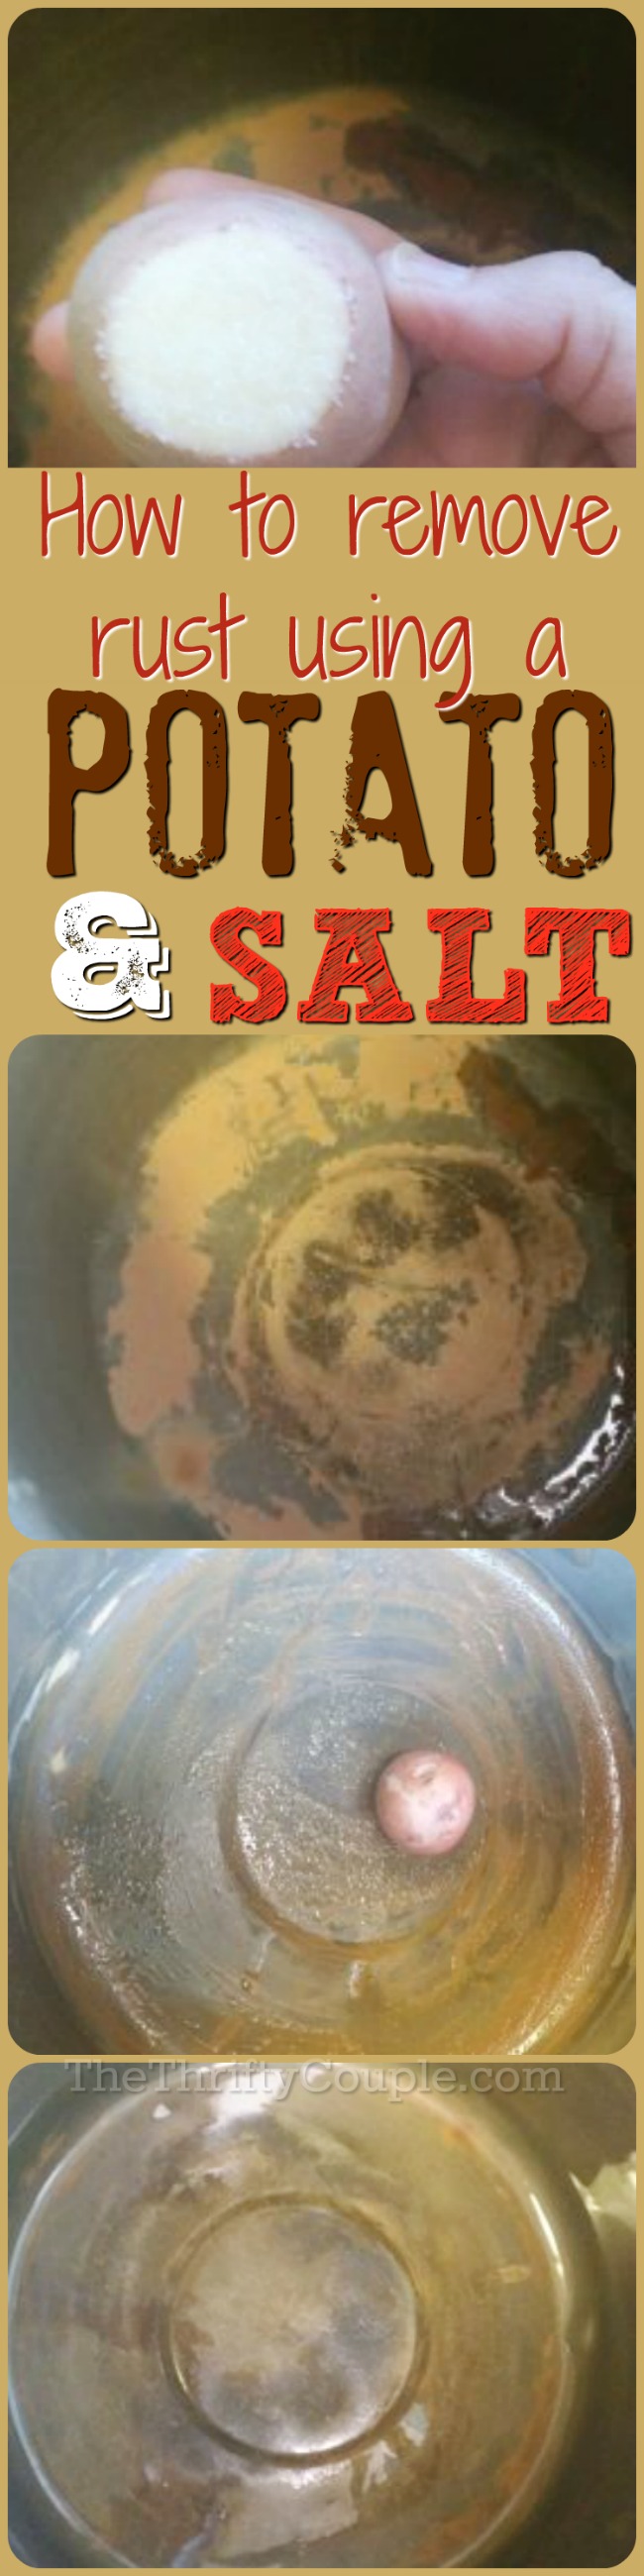 how-to-remove-rust-using-potato-salt